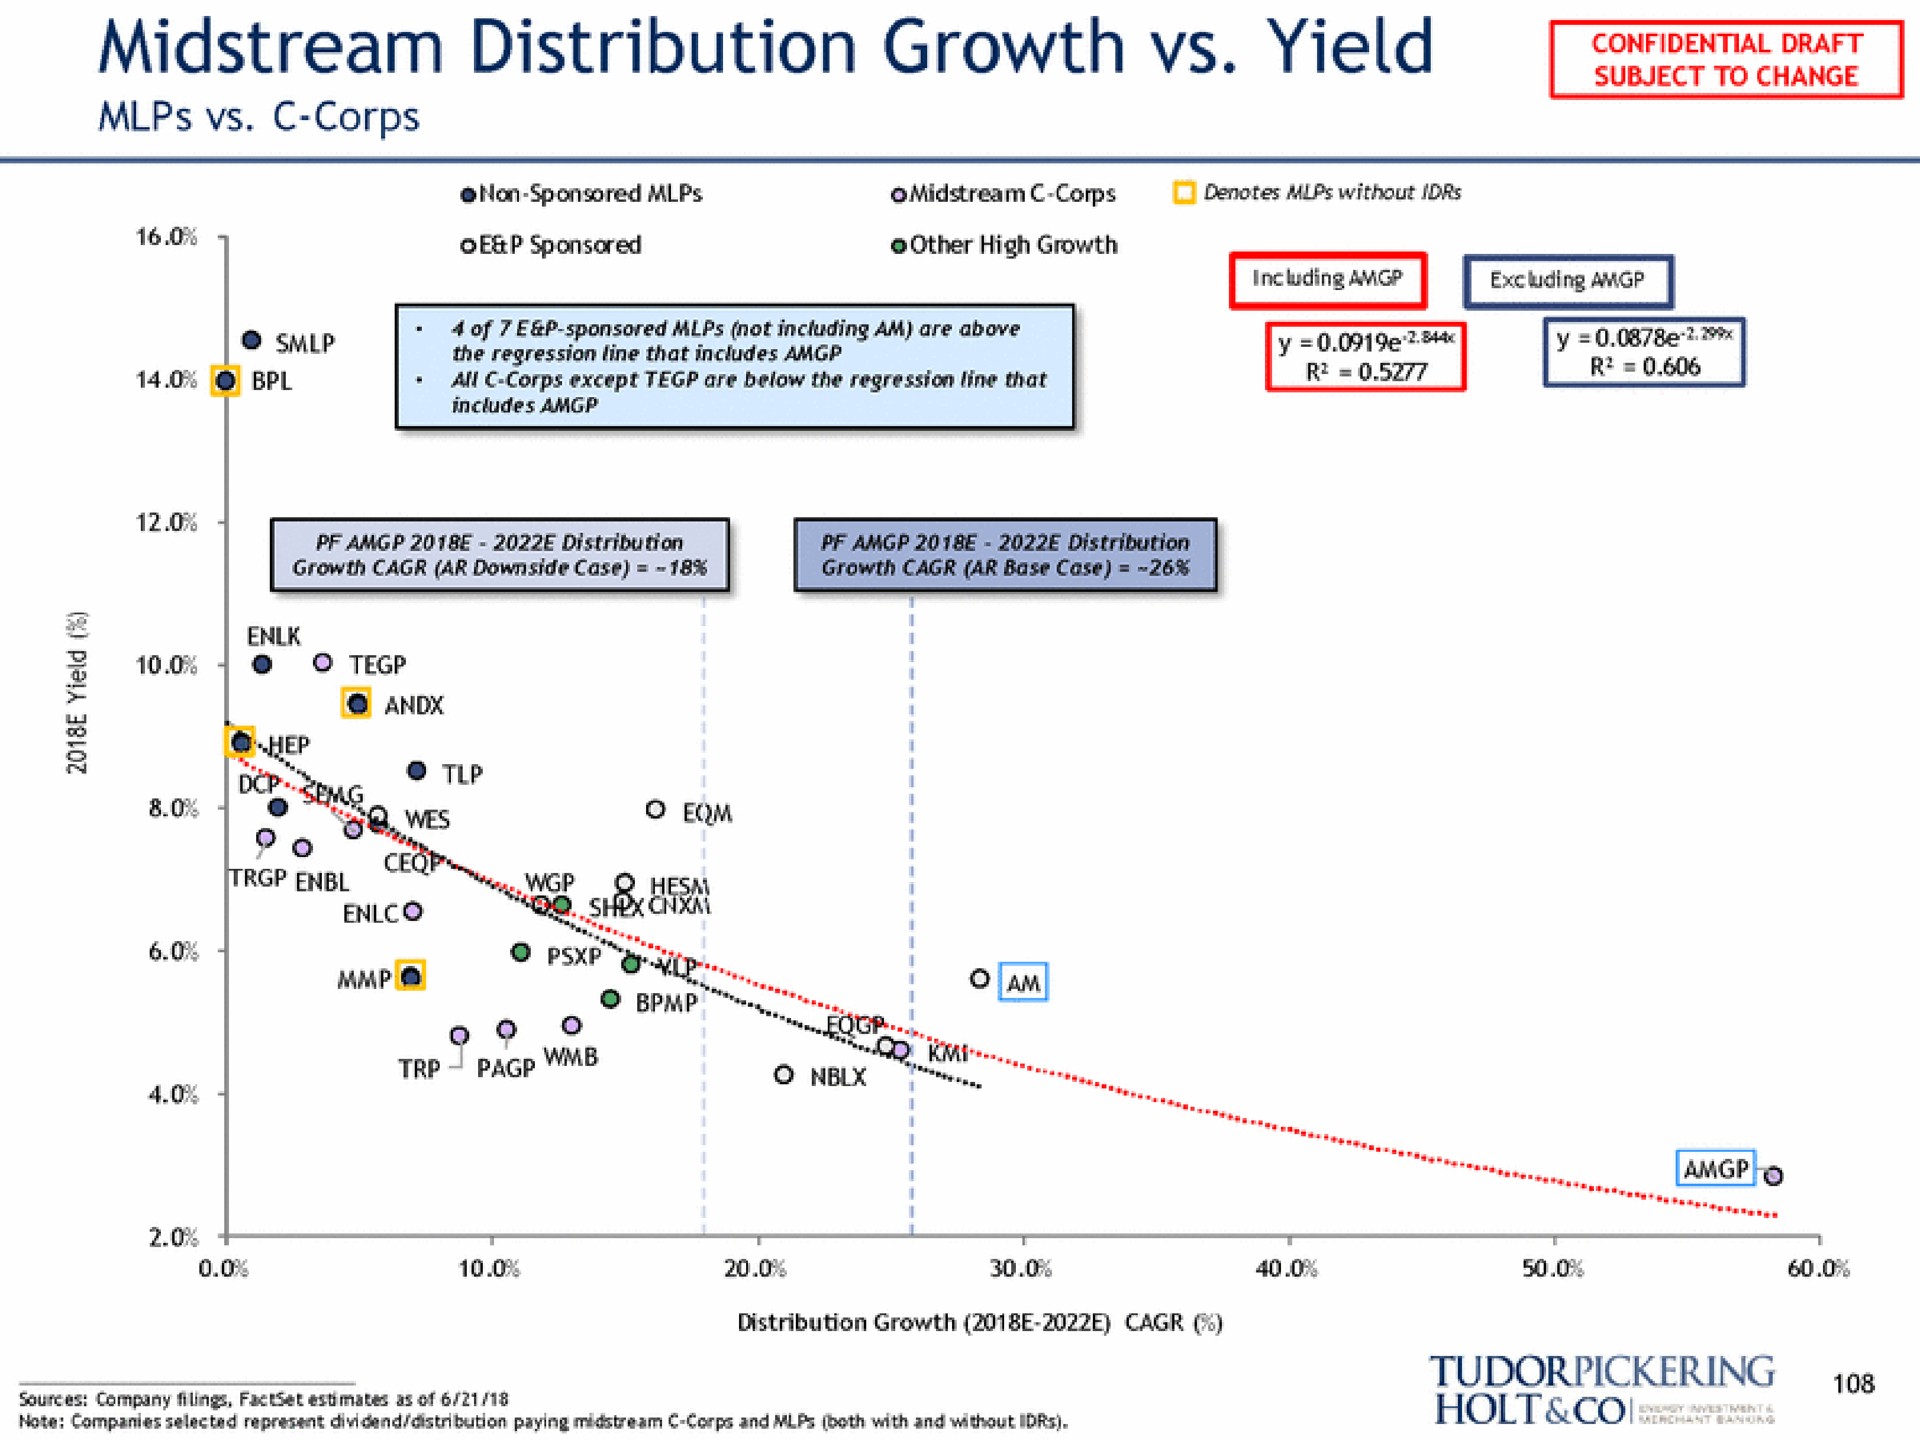 midstream distribution growth yield | Tudor, Pickering, Holt & Co